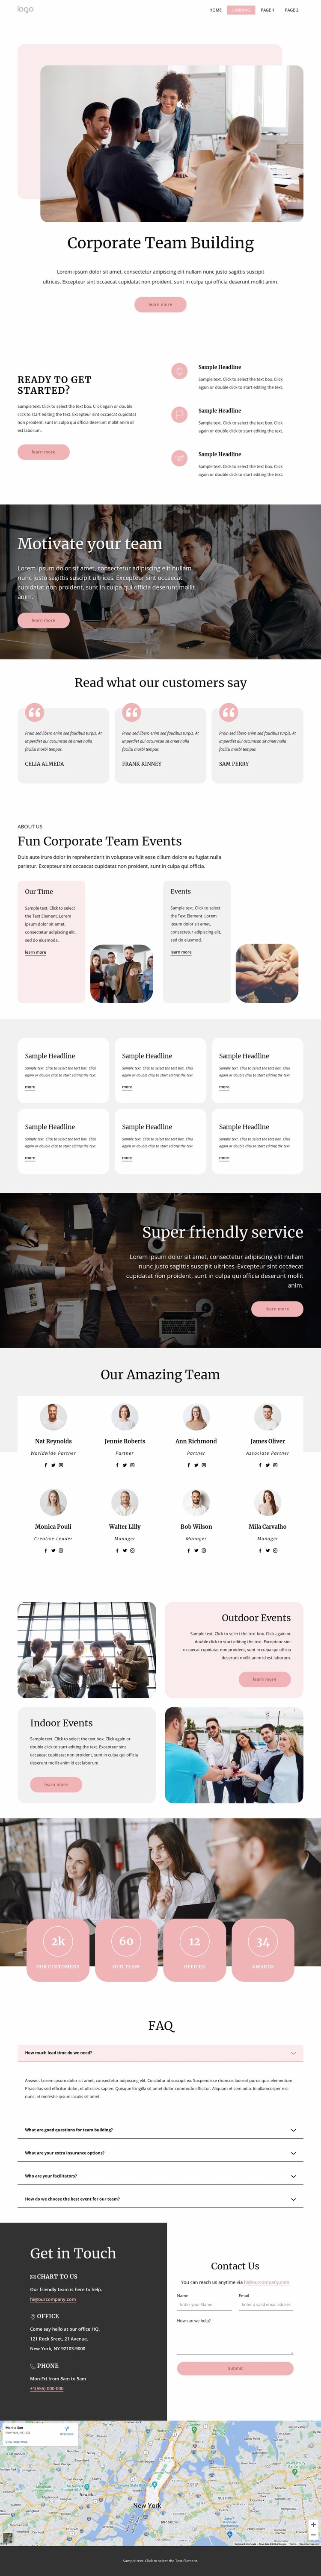 Corporate team building Website Mockup